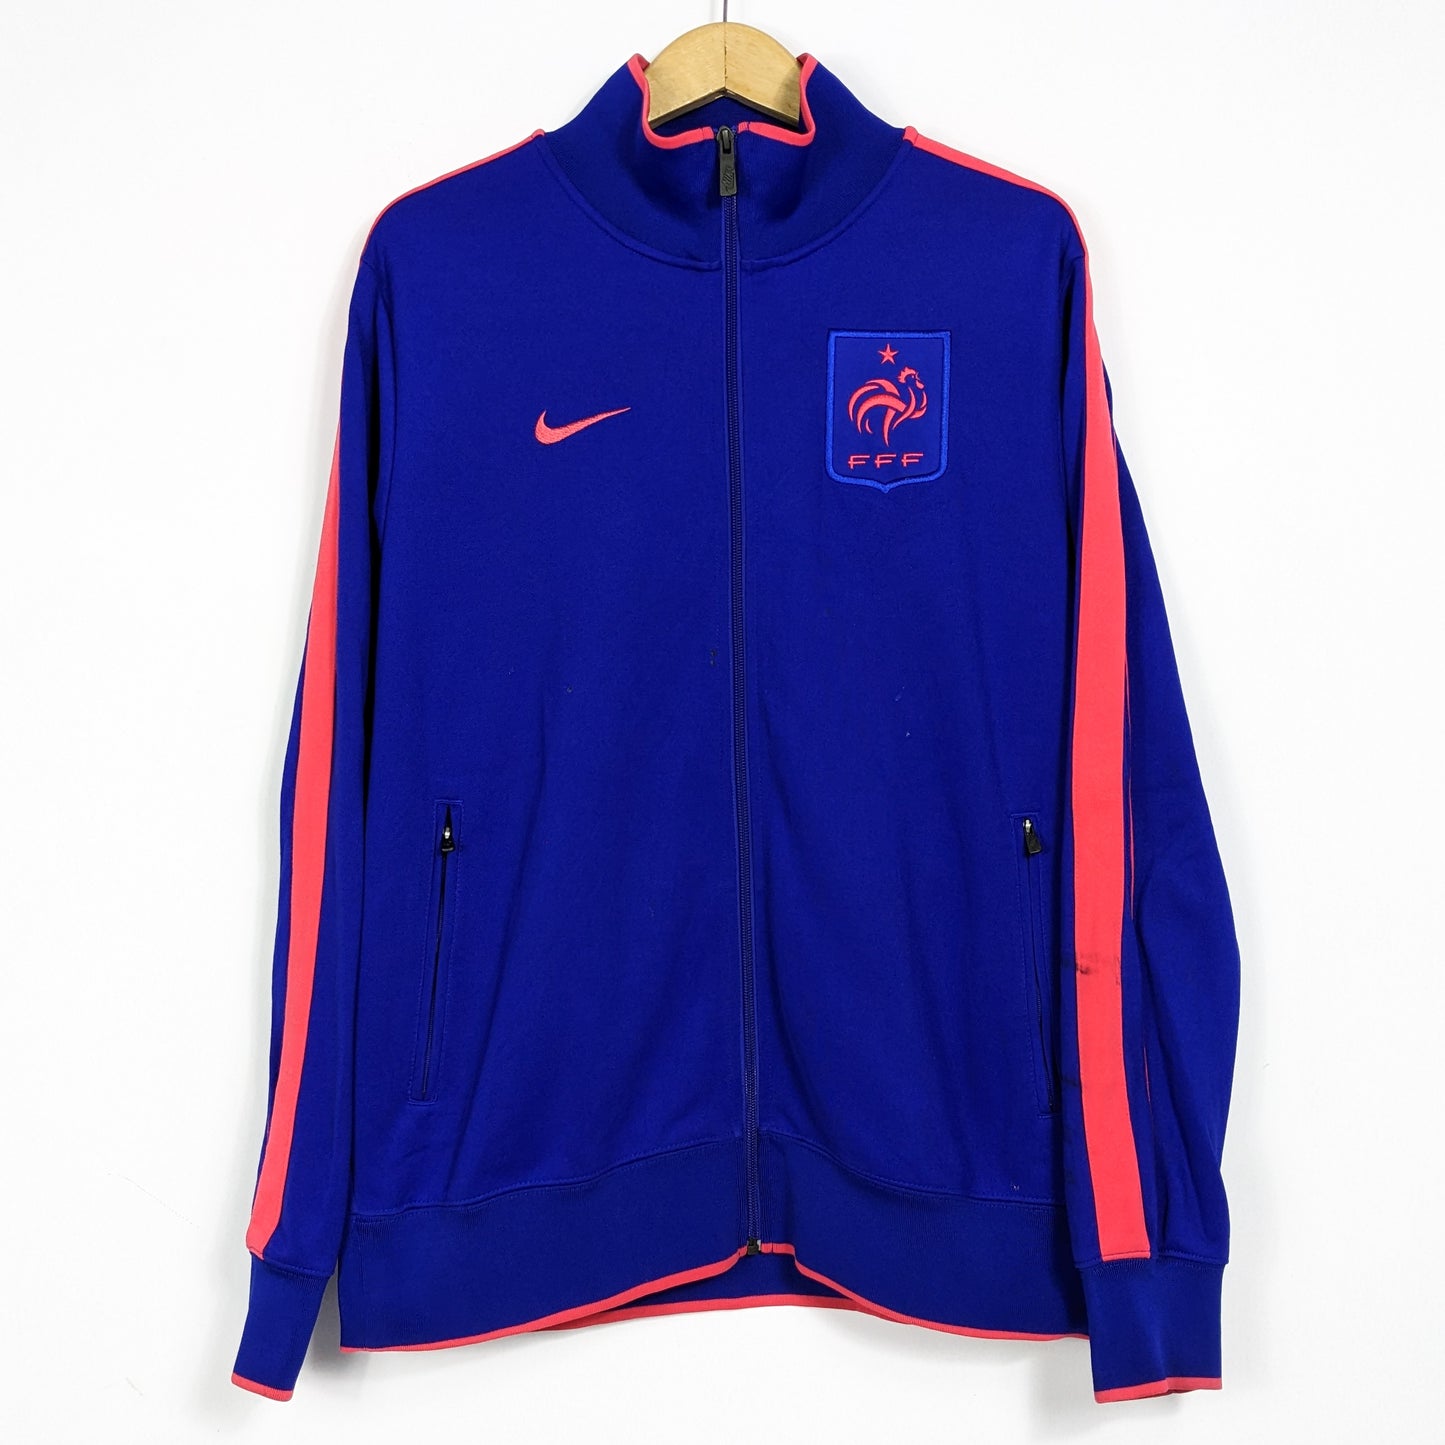 Authentic France 2012/2013 Track Jacket - Size L